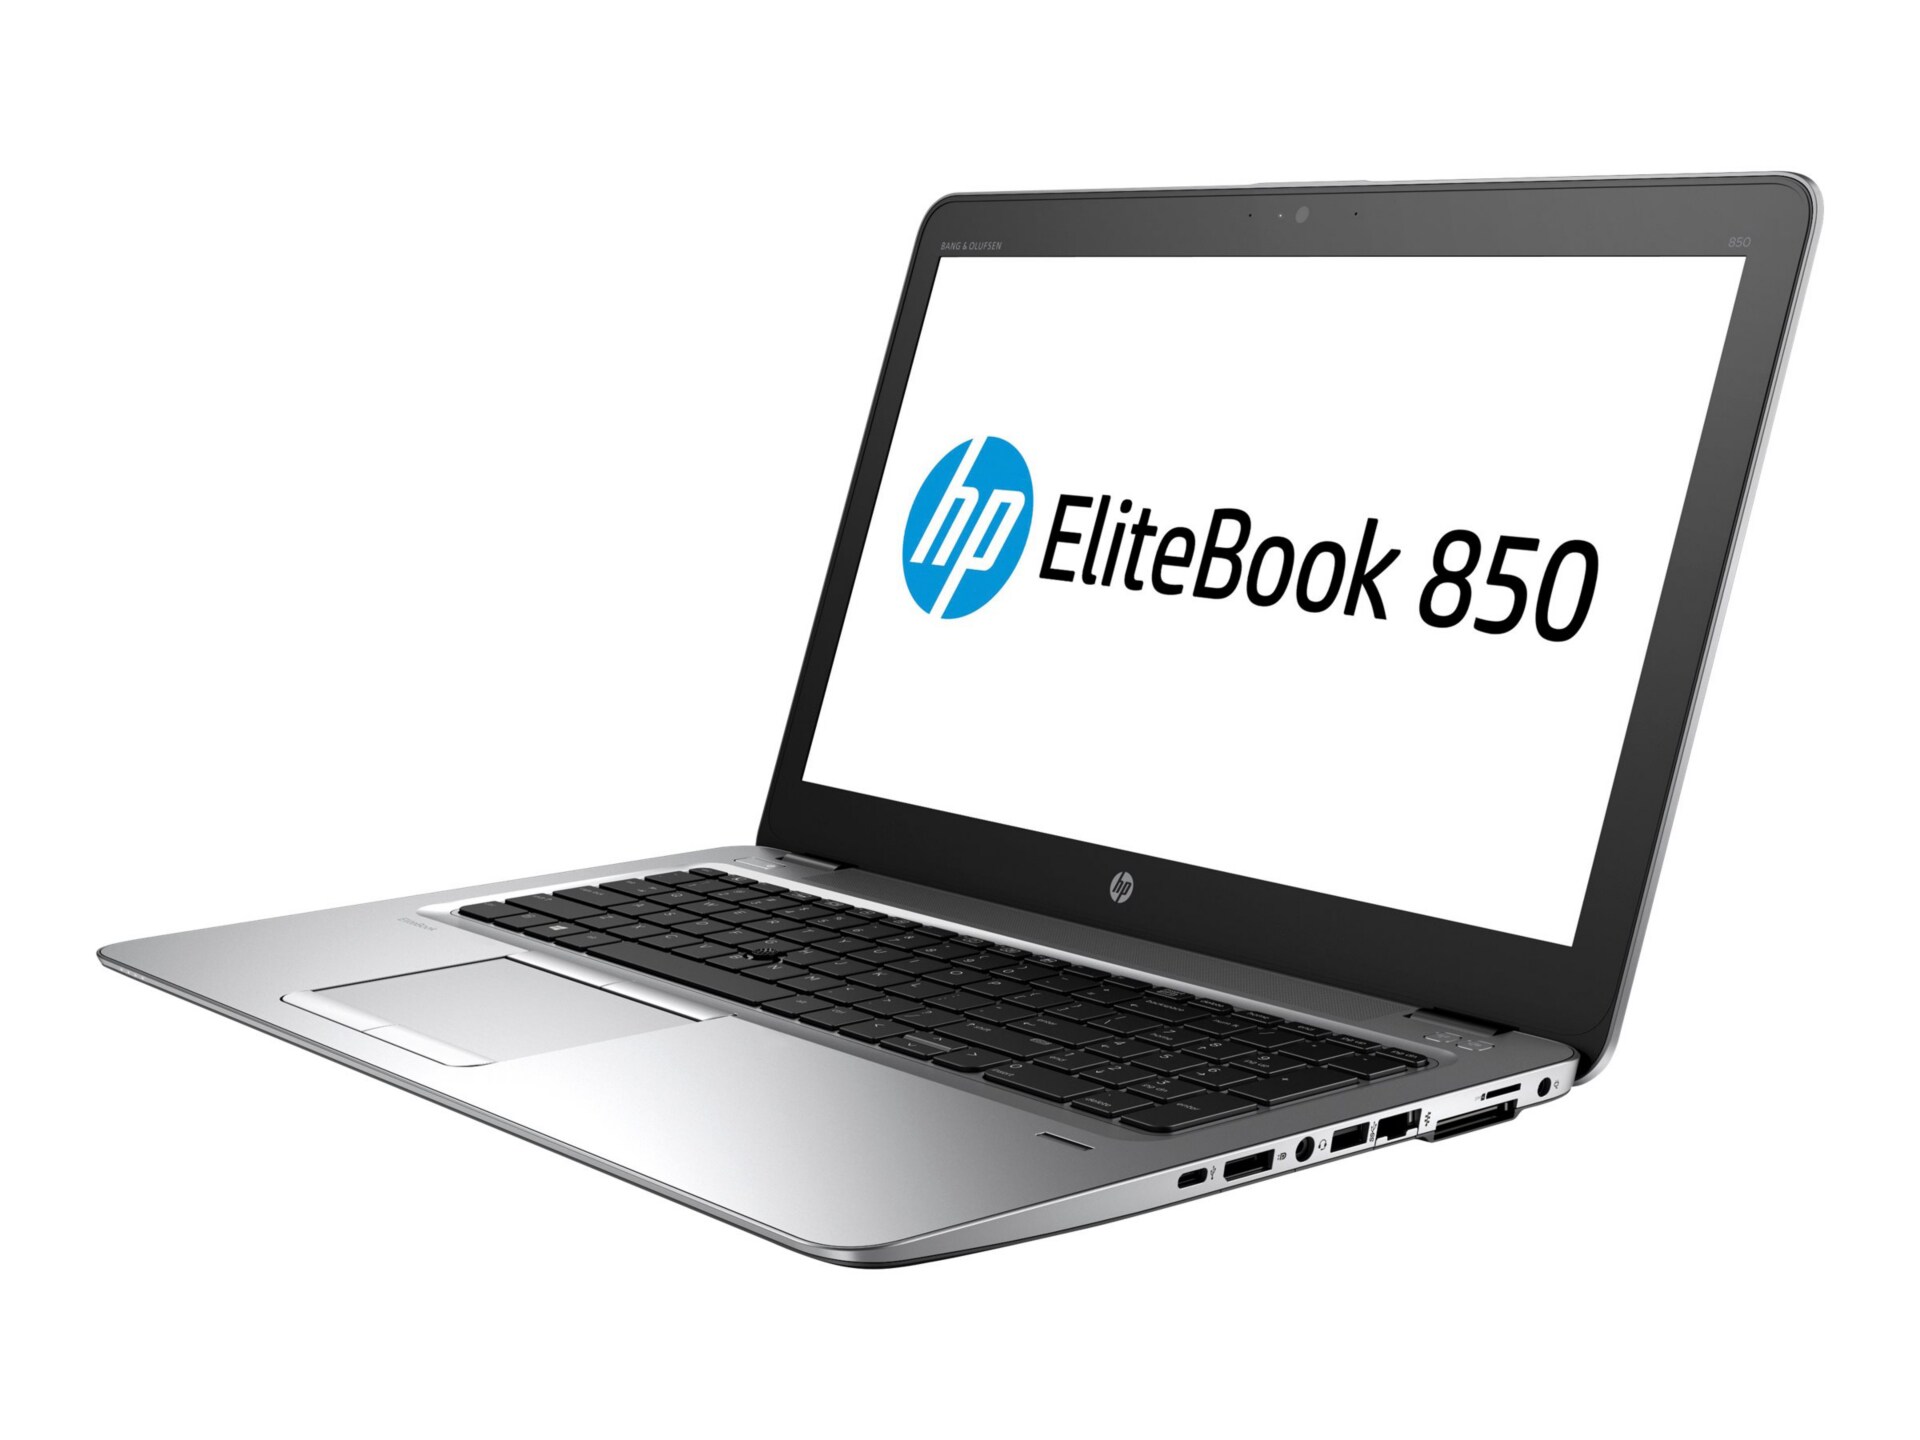 HP EliteBook 850 G3 Notebook PC